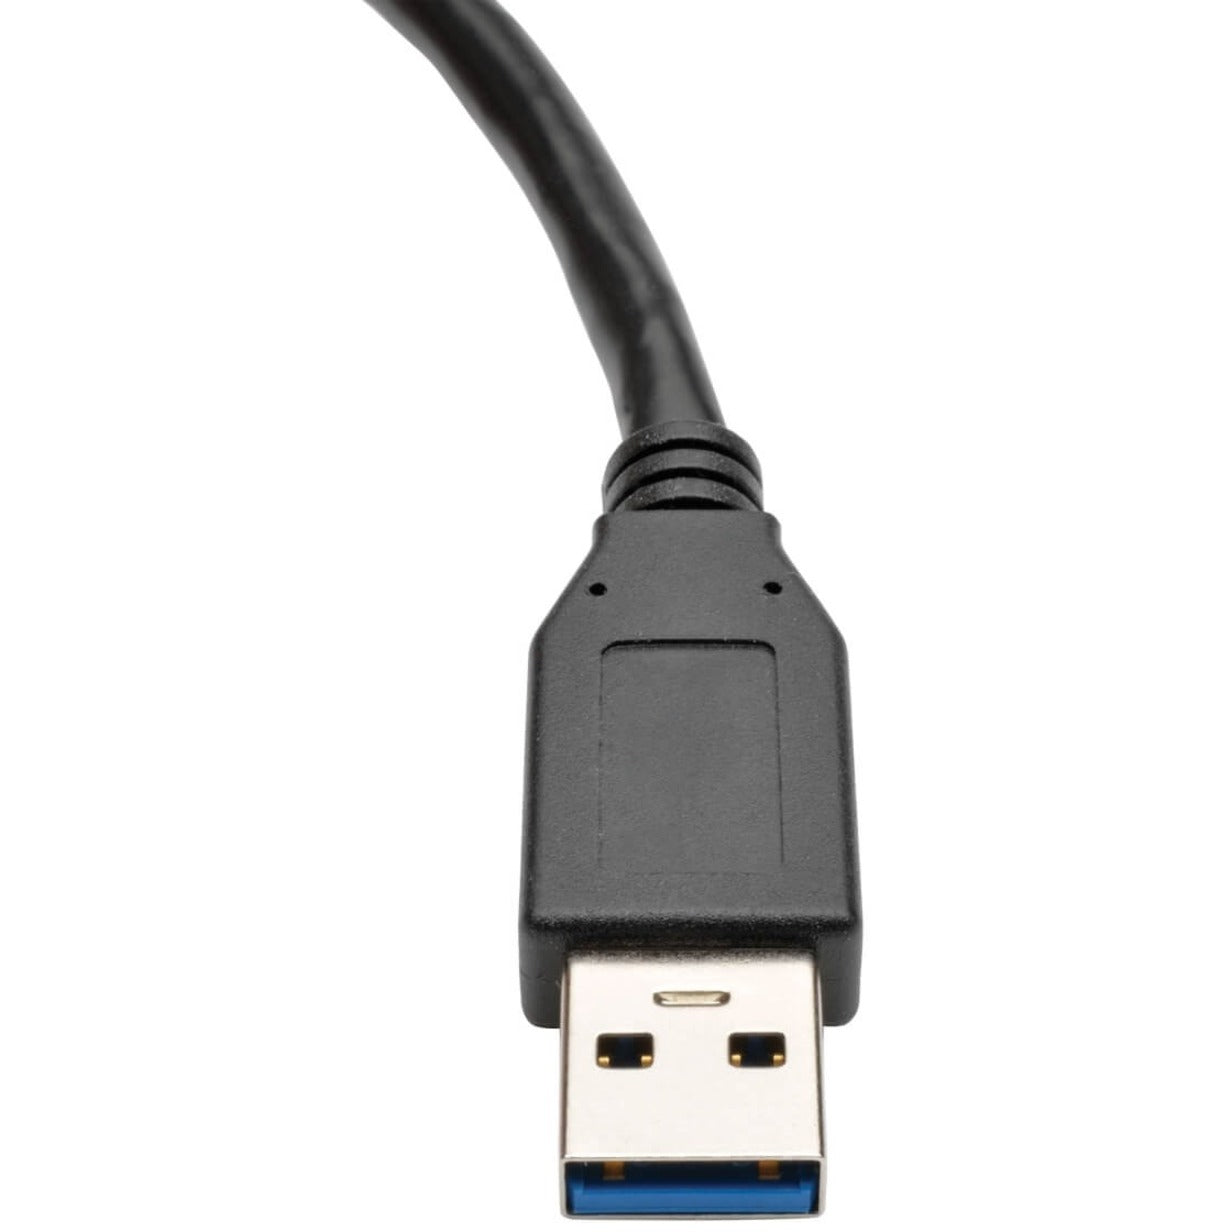 Tripp Lite U324-06N-BK USB 3.0 SuperSpeed Cable de Extensión Tipo A (M/H) Negro 6 pulgadas. Marca: Tripp Lite.